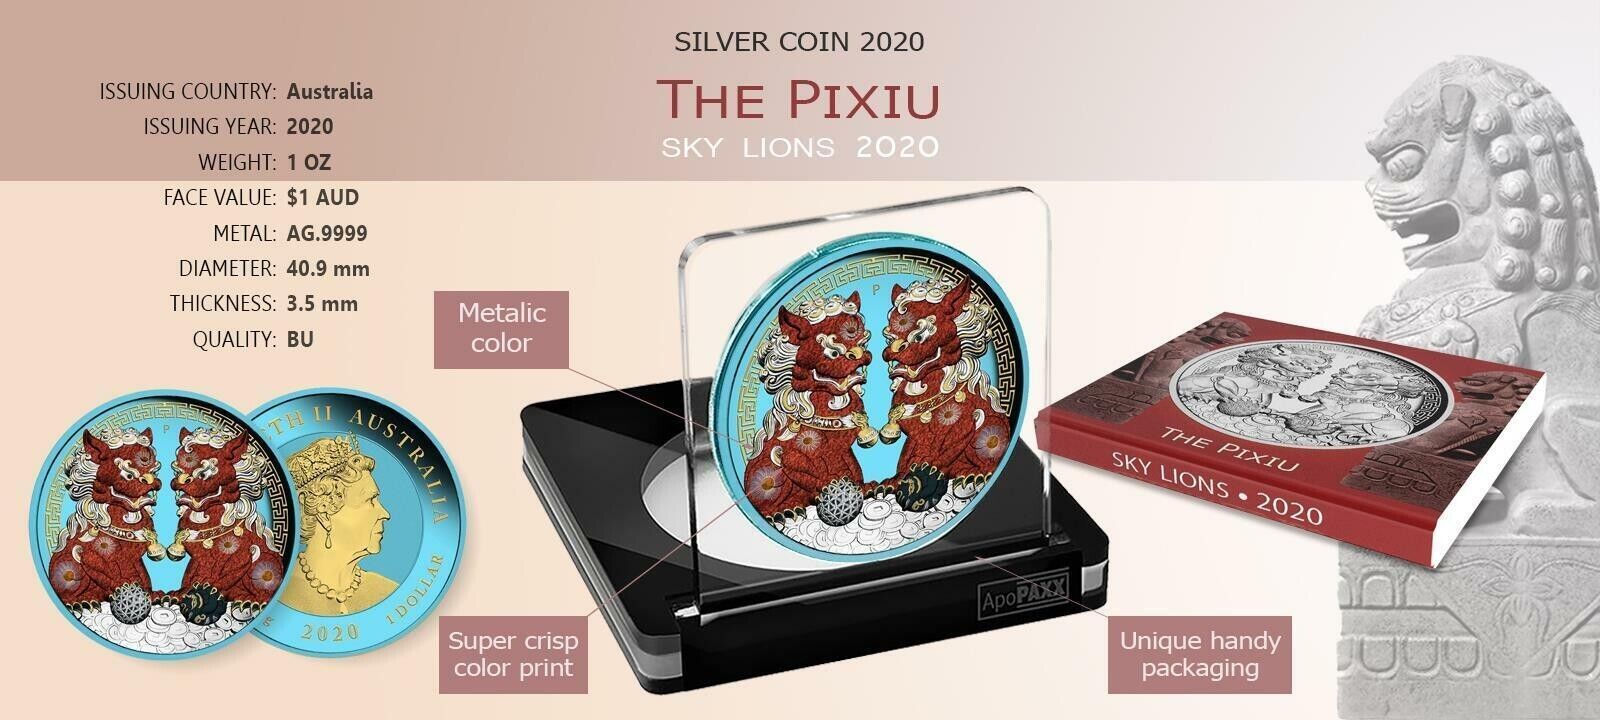 1 Oz Silver Coin 2020 $1 Australia Guardian Sky Lions The Pixiu - Bloody Lions-classypw.com-4